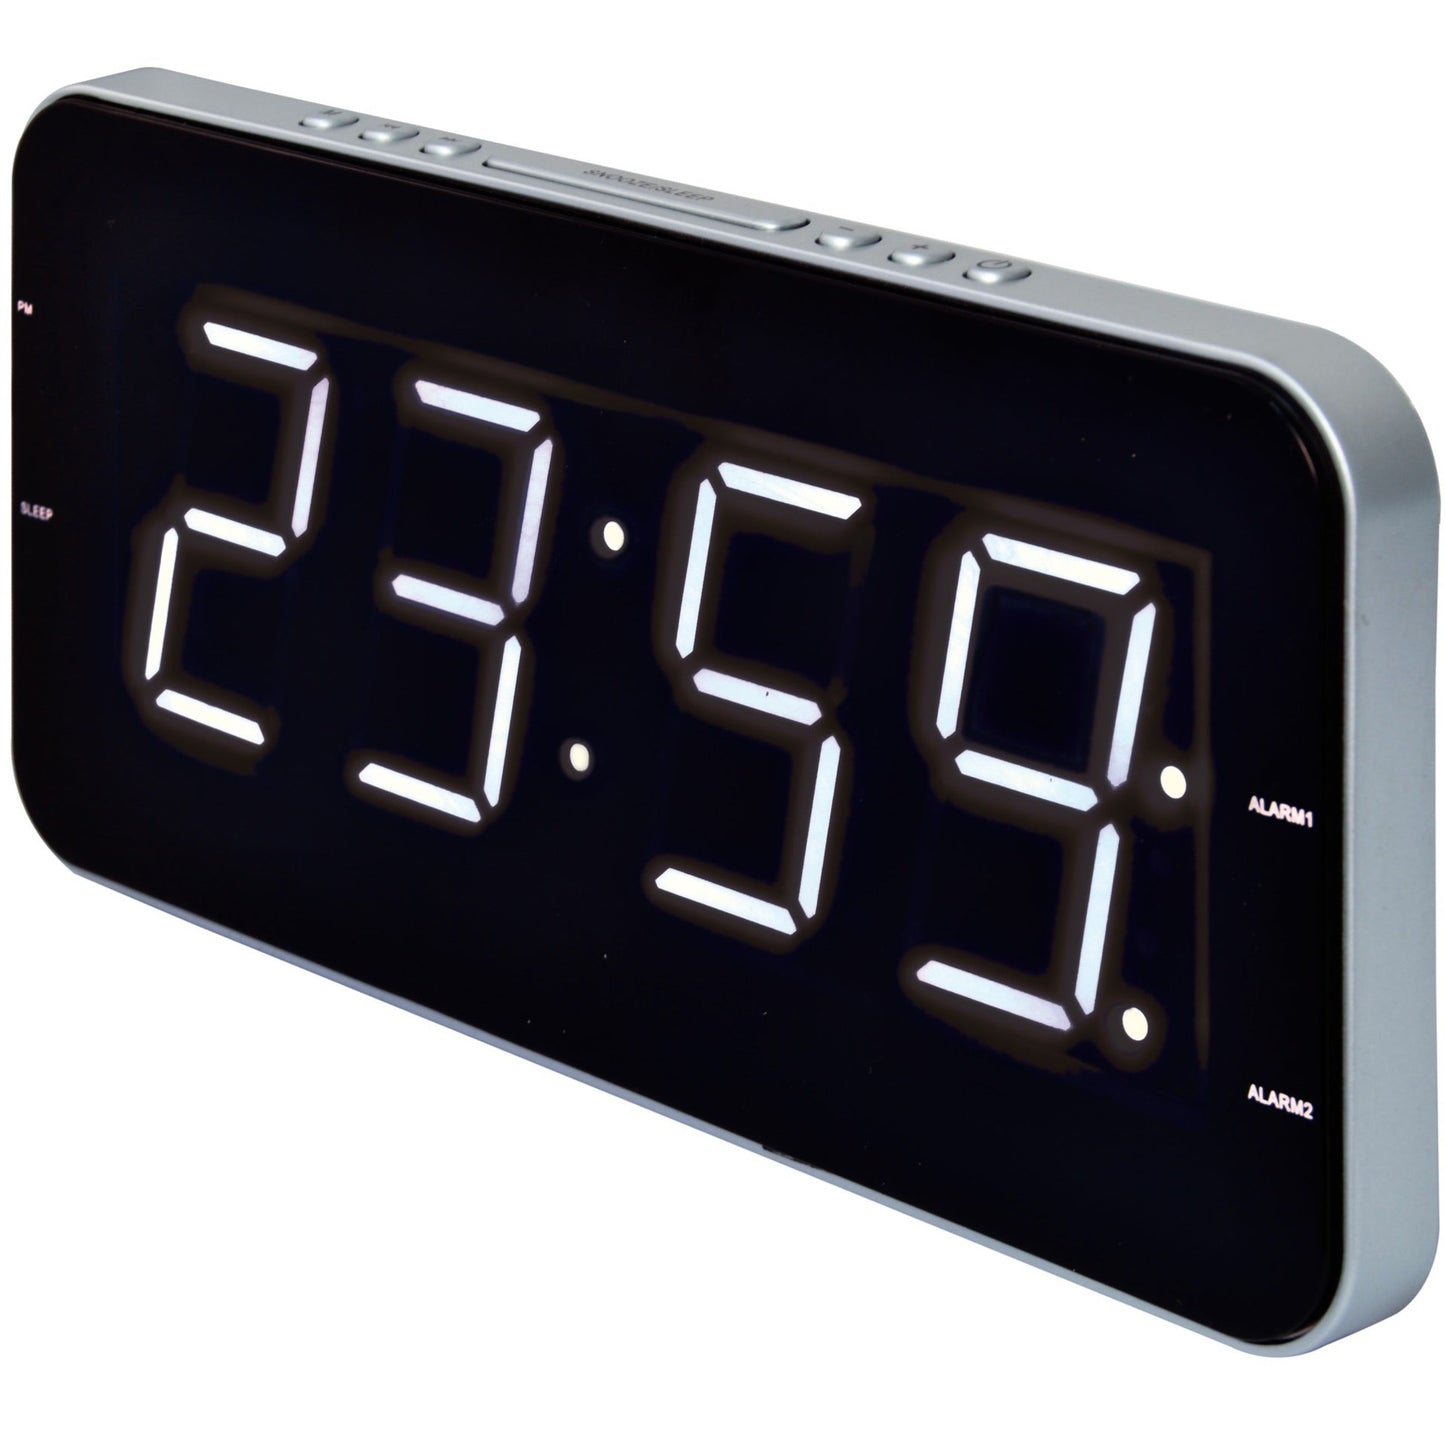 Roadstar FM Radio Alarm Clock Big Display (CLR-2615)